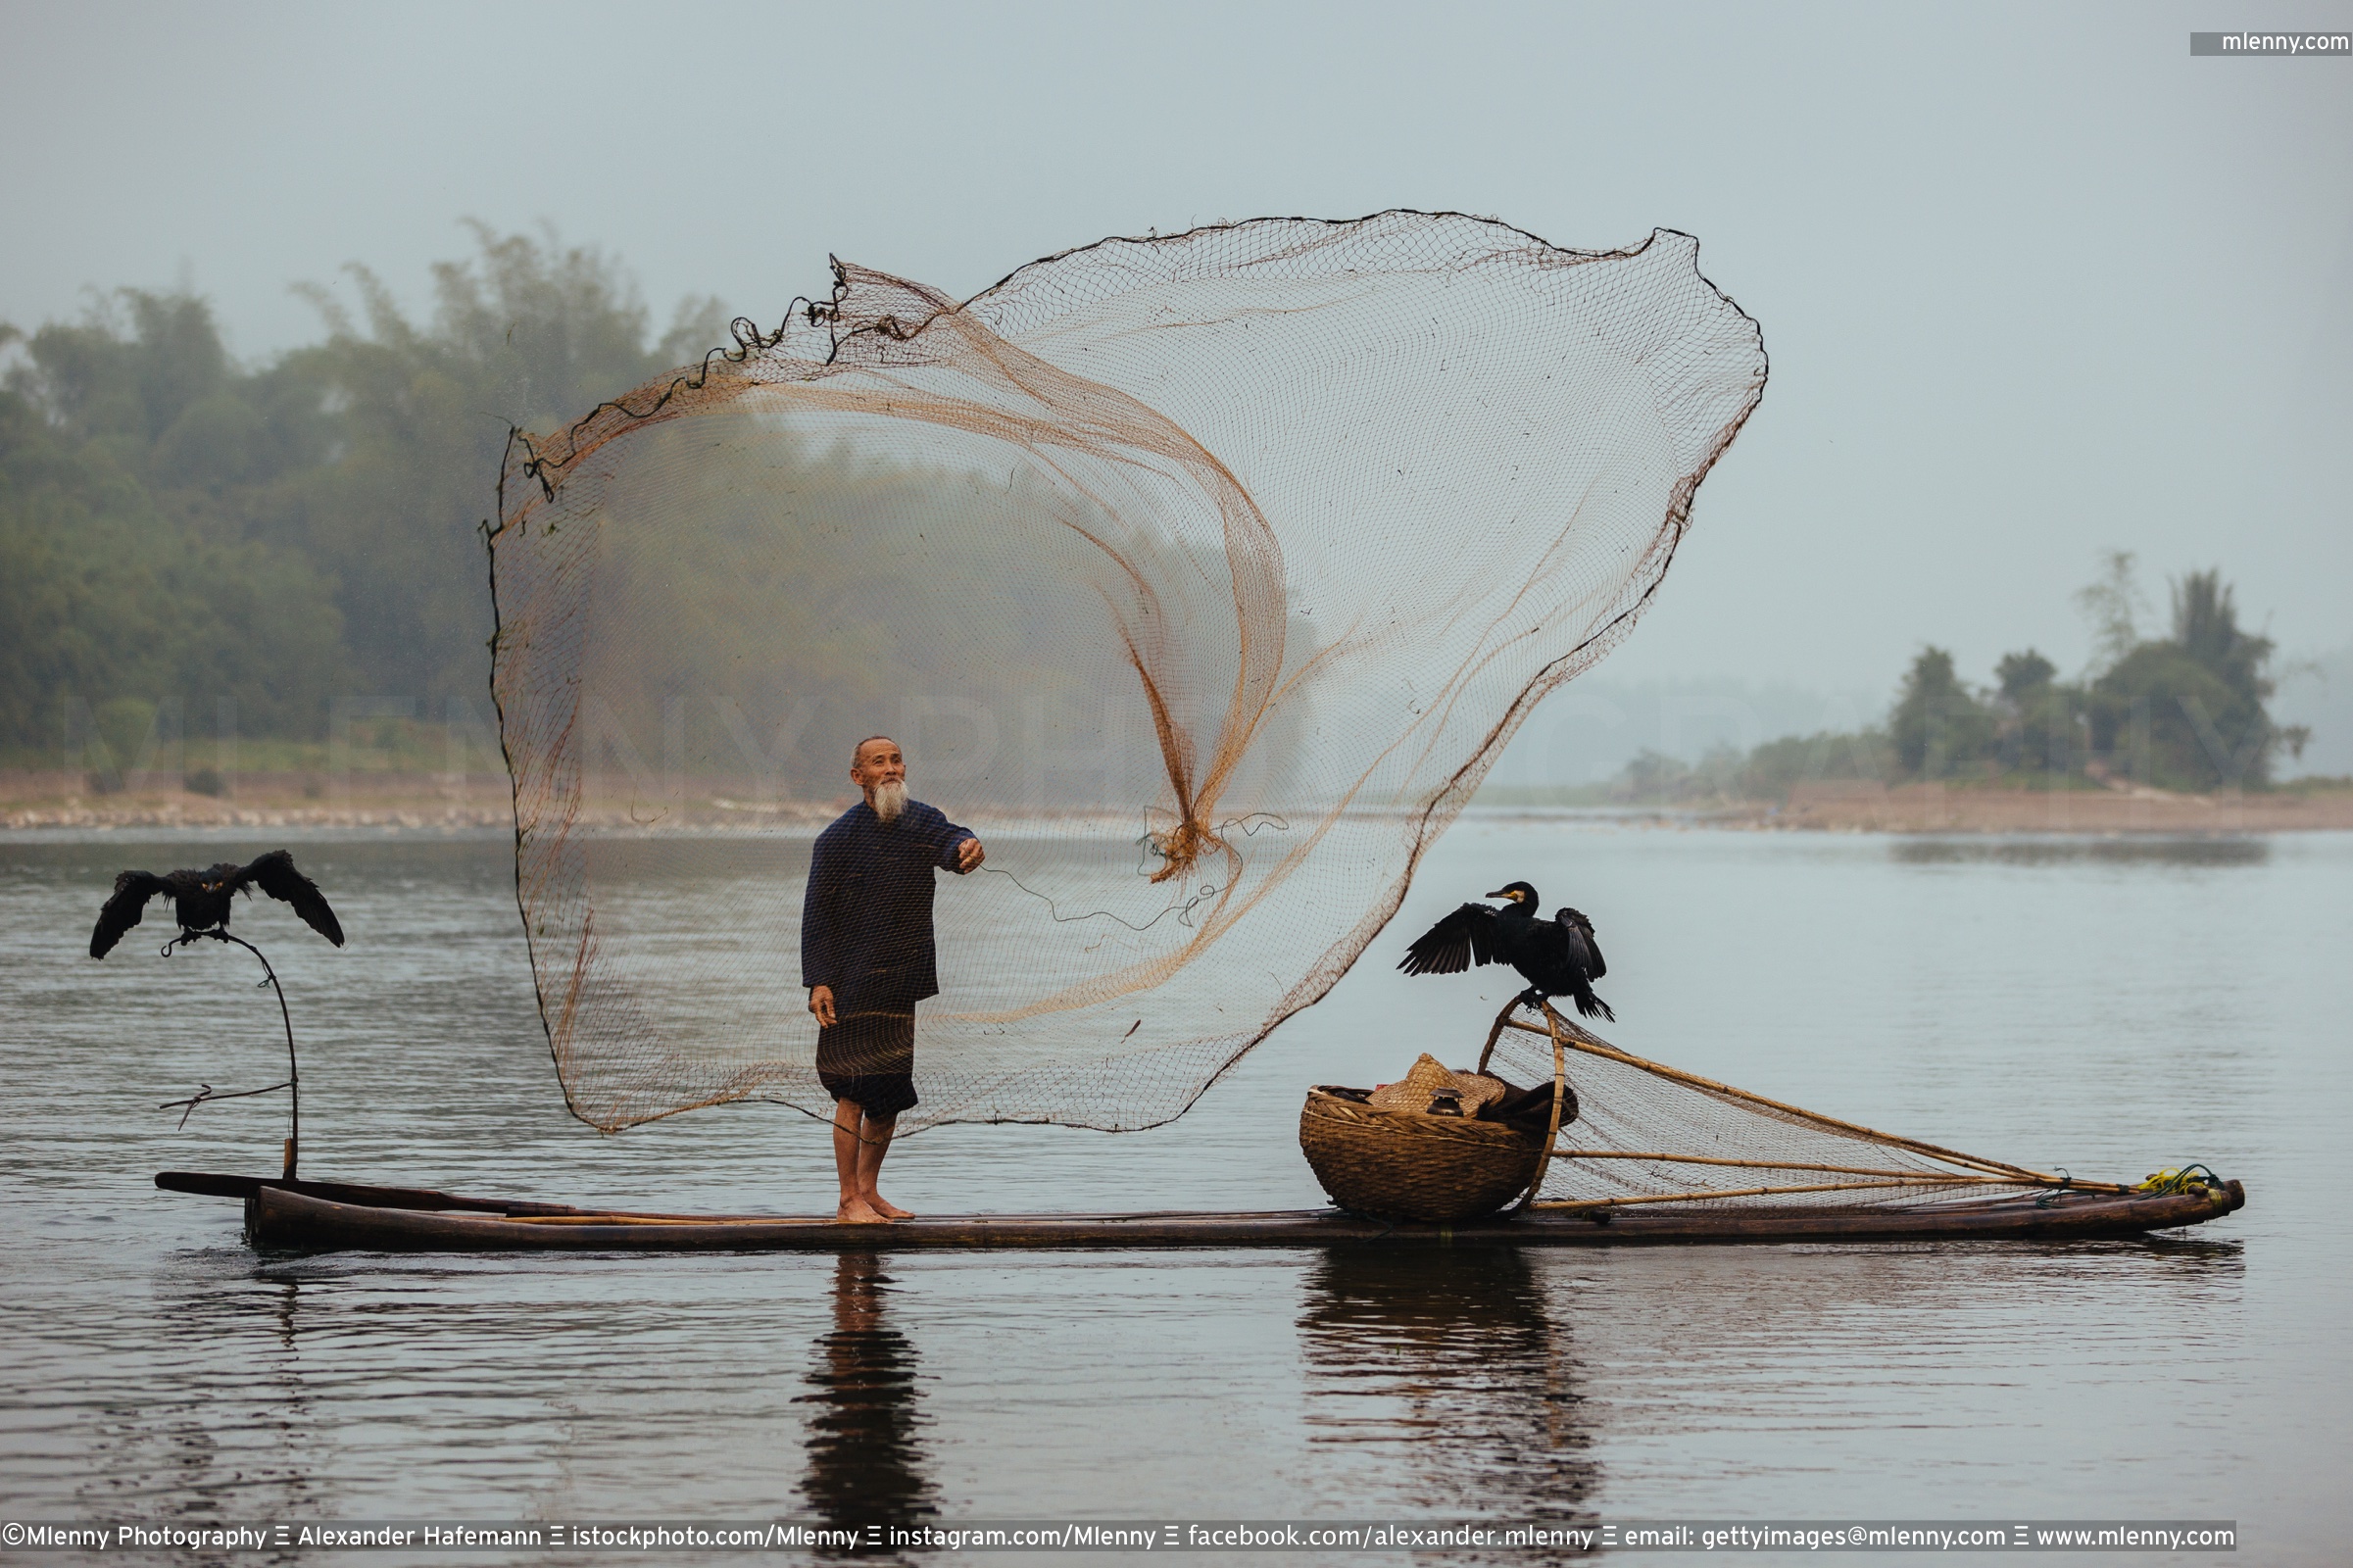 Chinese traditional senior fisherman throwing fishing net Li River, China -  Mlenny Photography Travel, Nature, People & AI